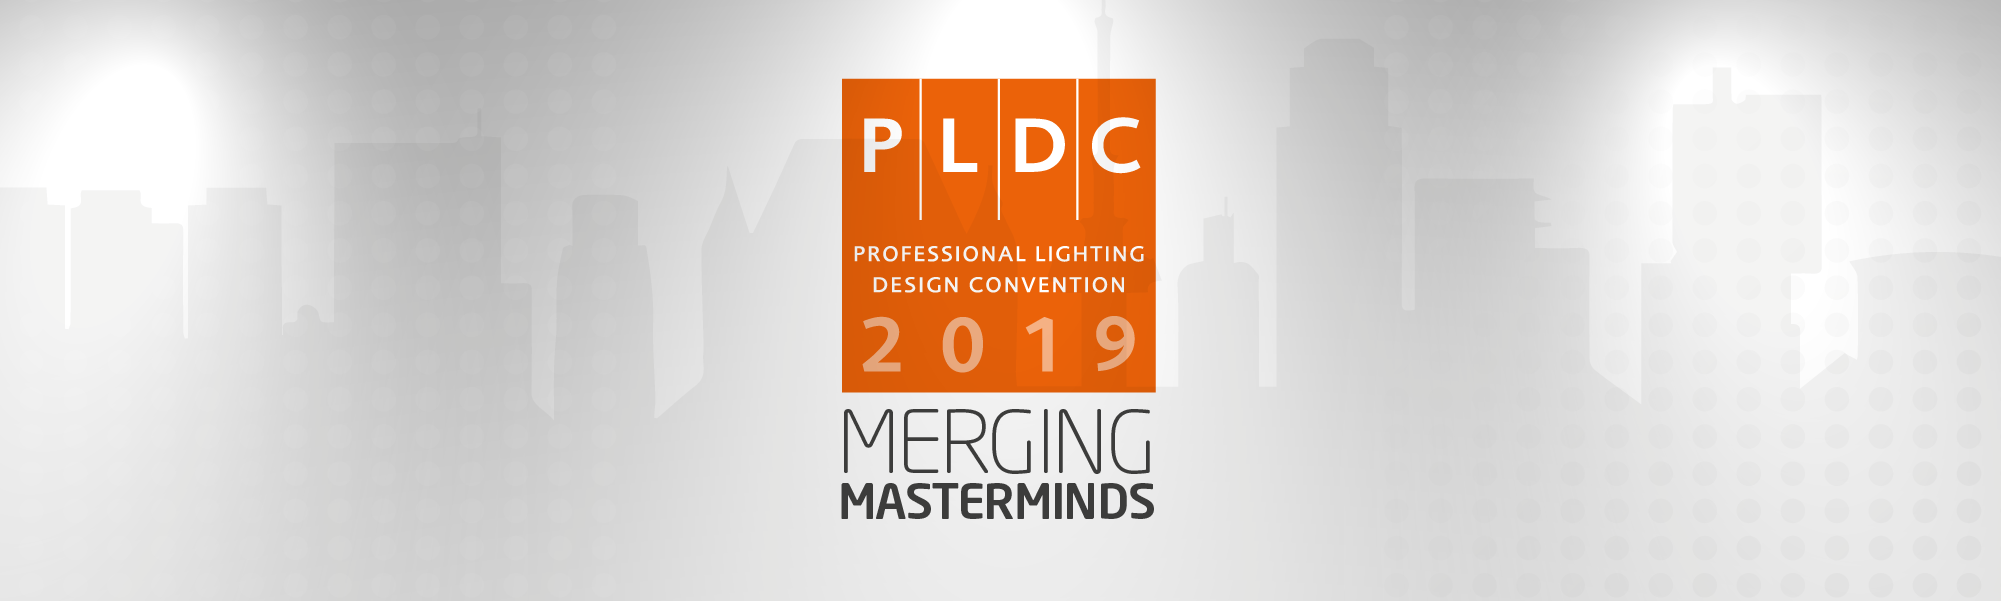 PLDC 2019 - Merging Masterminds 